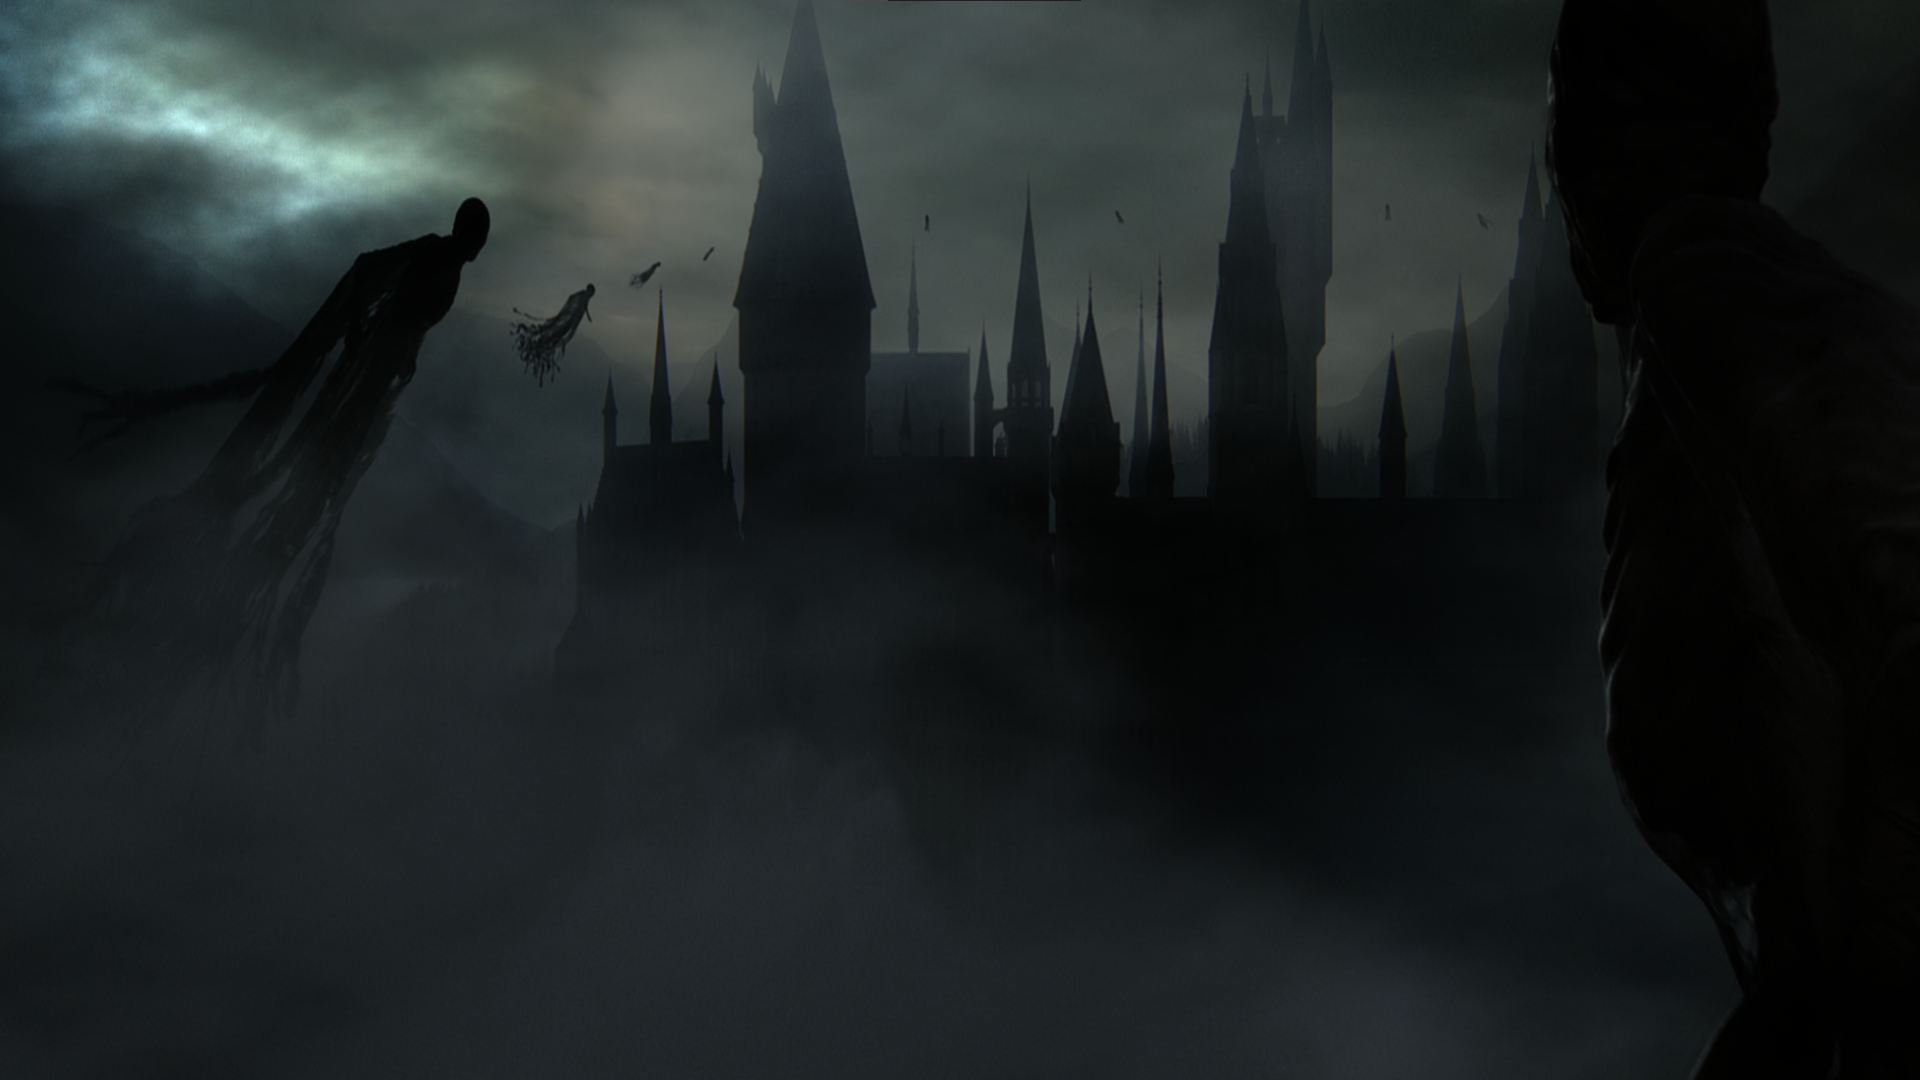 General 1920x1080 Dementors (Harry Potter) night eerie castle digital art low light Hogwarts creature mist floating sky silhouette